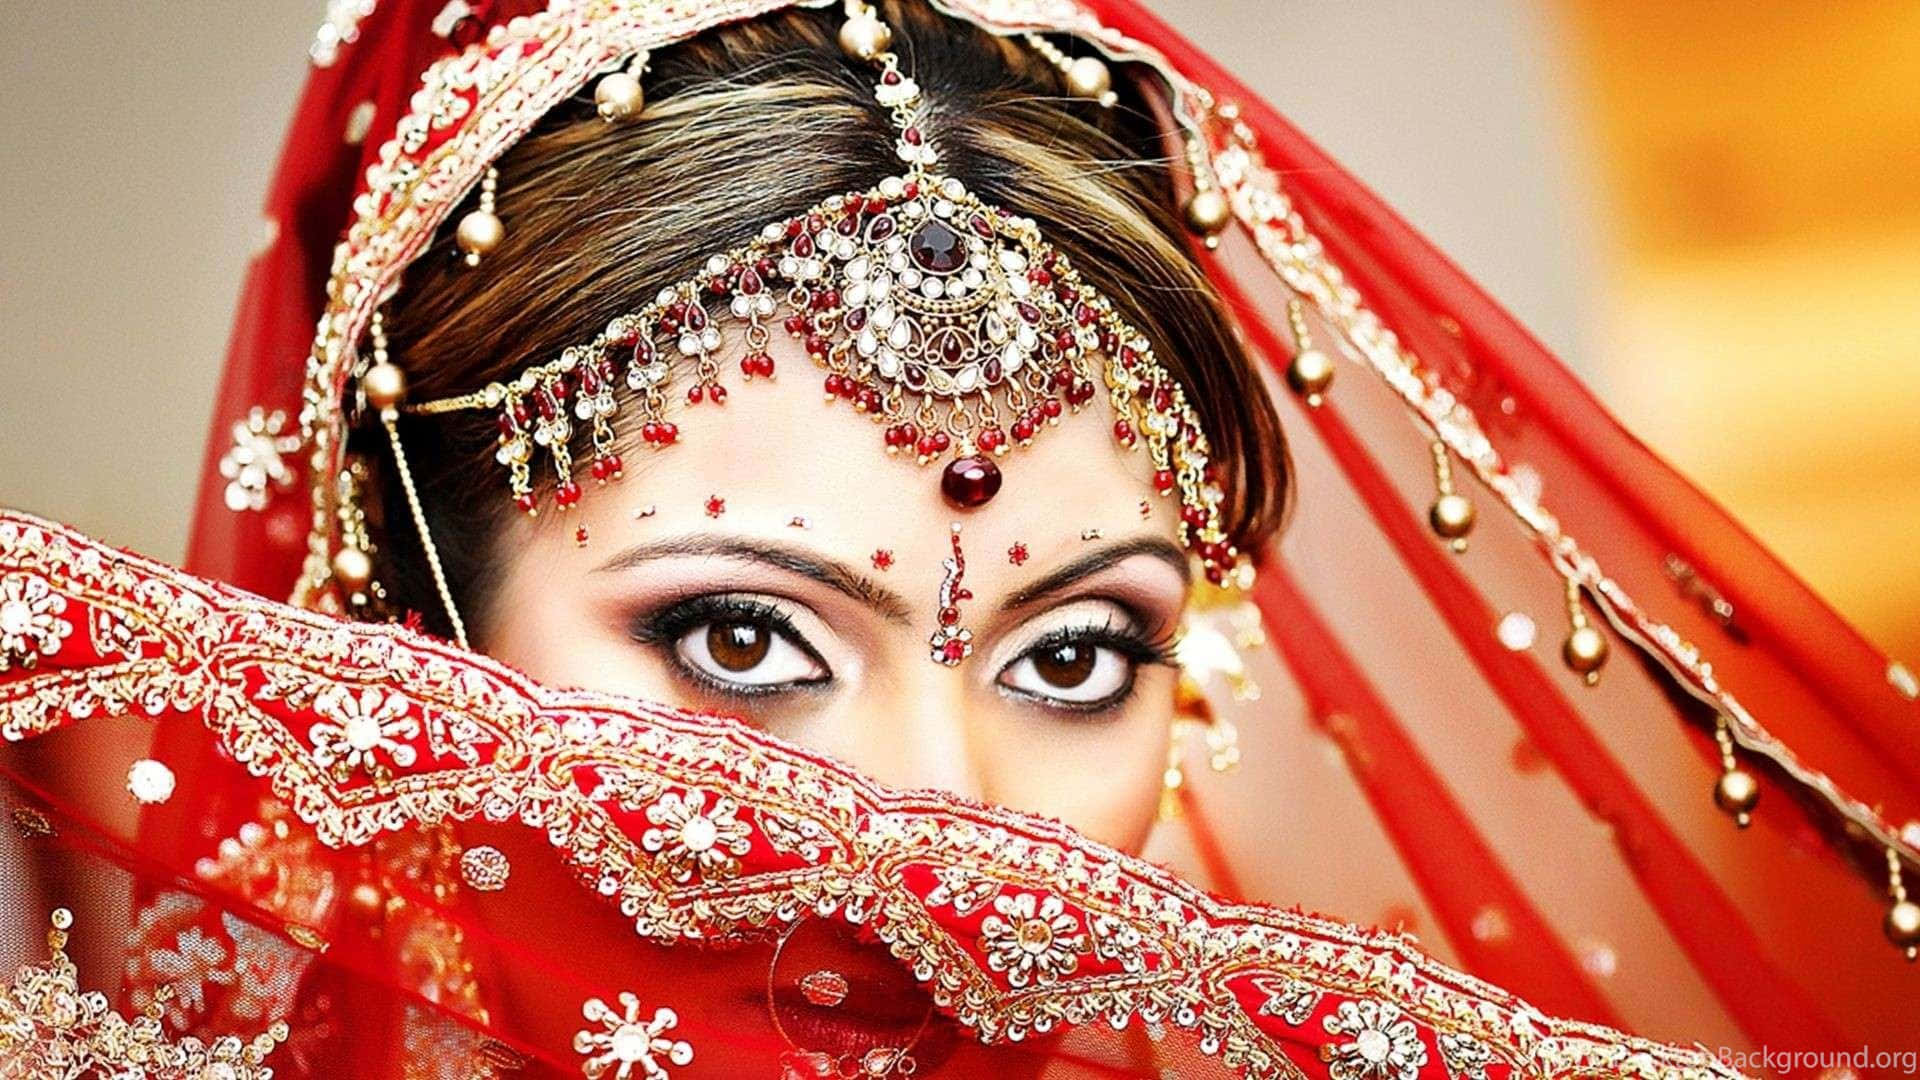 Indian Bride Pictures Wallpaper